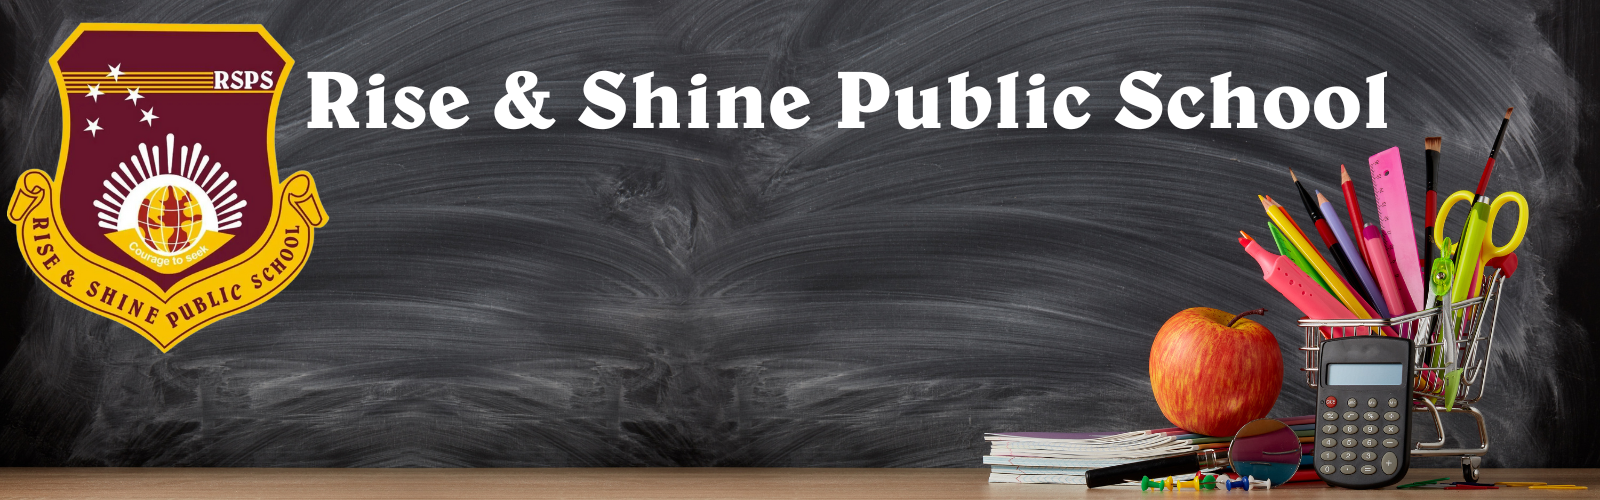 Rise & Shine Public School